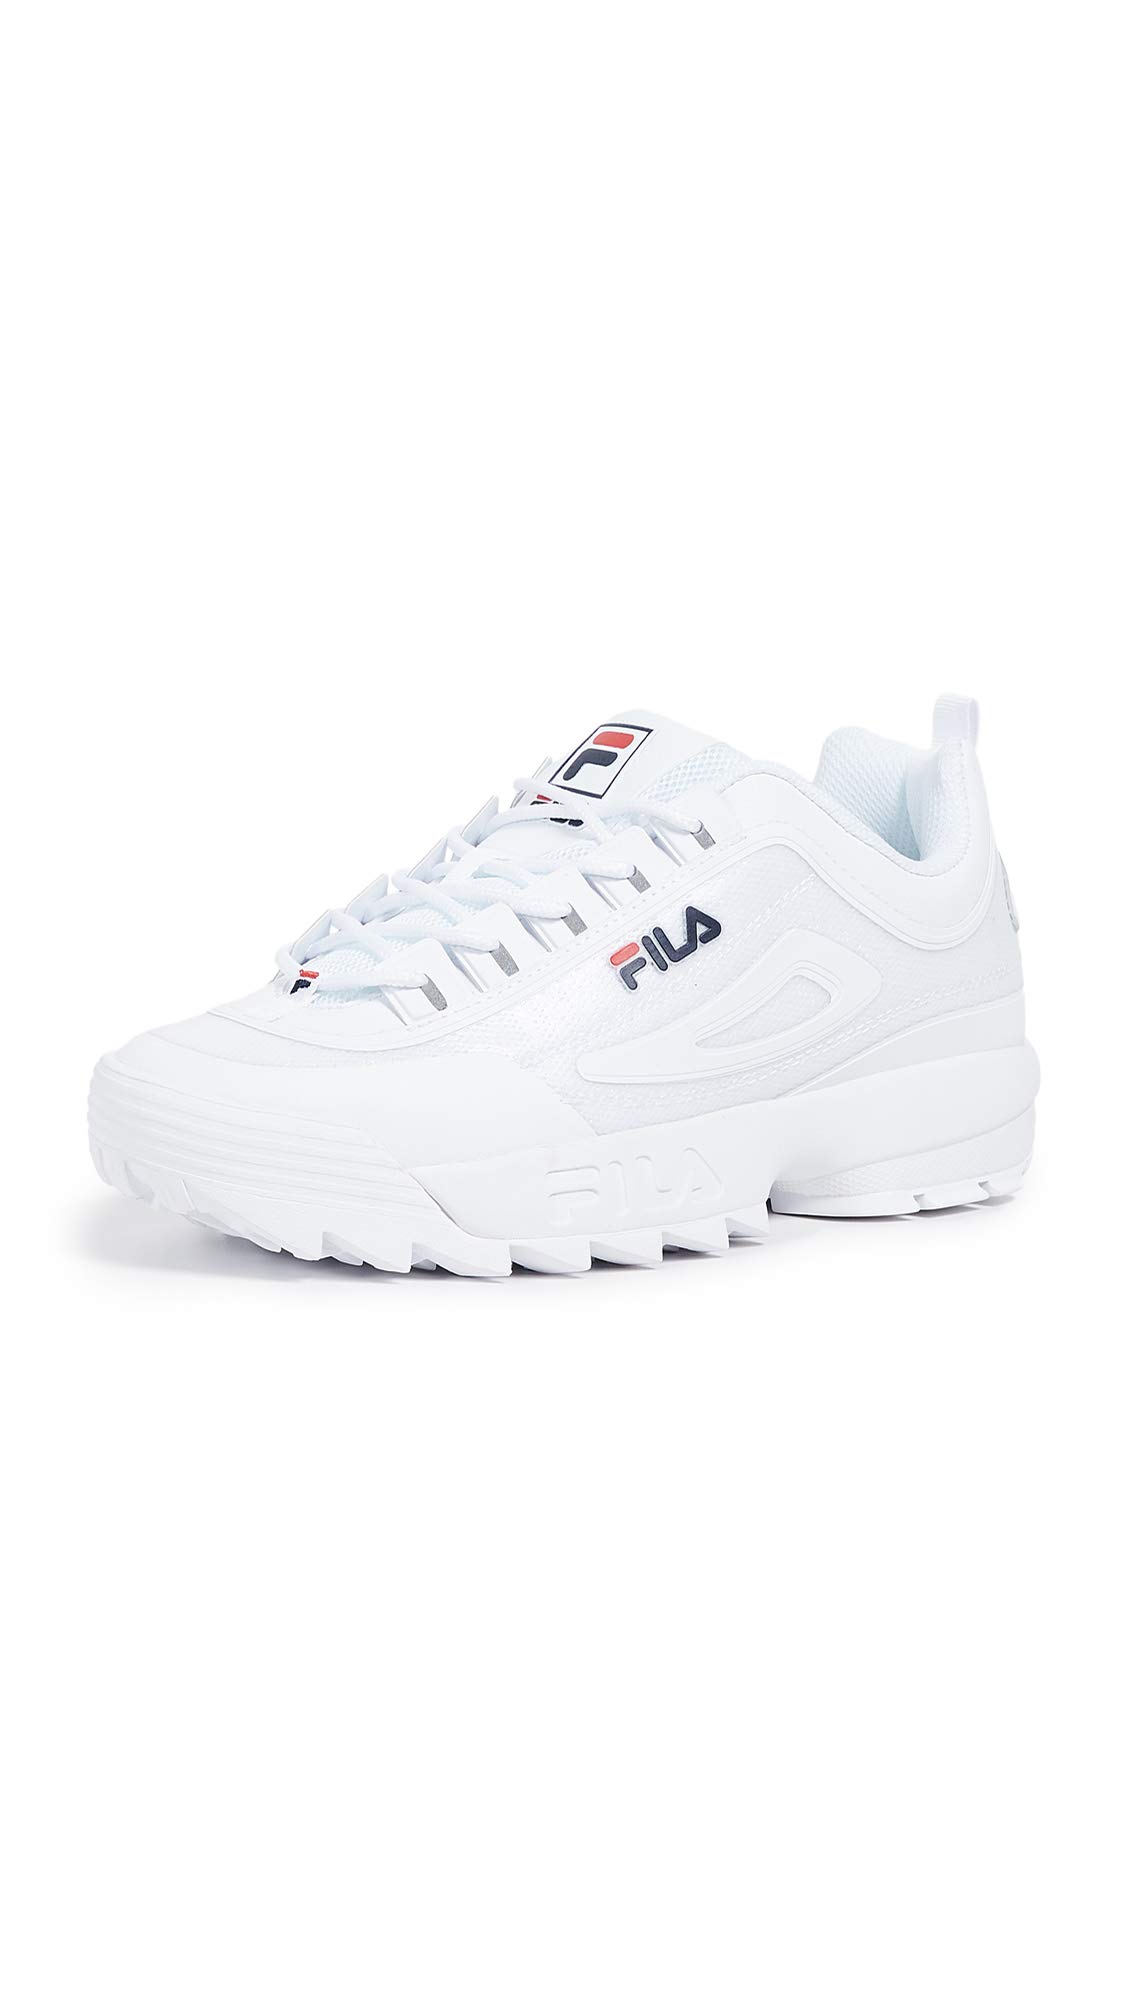 Fila Disruptor Il Premium-Sneakers, bequem, vielseitig Sneaker, Weiß/Marineblau/Rot, 39 EU